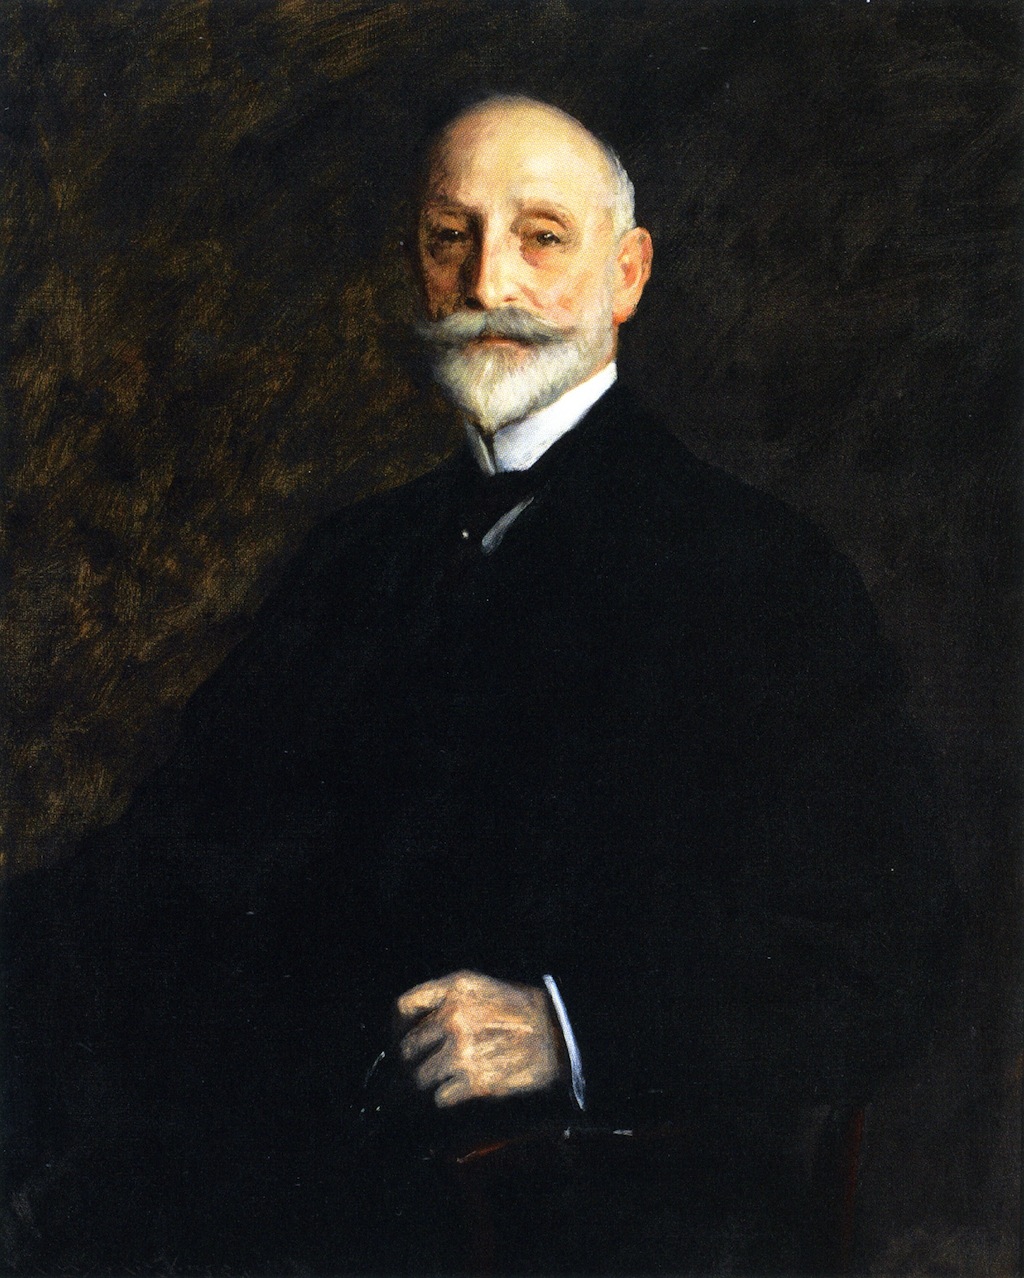 August B. Loeb, Esq by William Merritt Chase, 1905